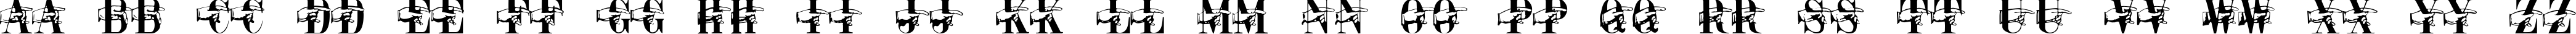 Пример написания английского алфавита шрифтом Pointage